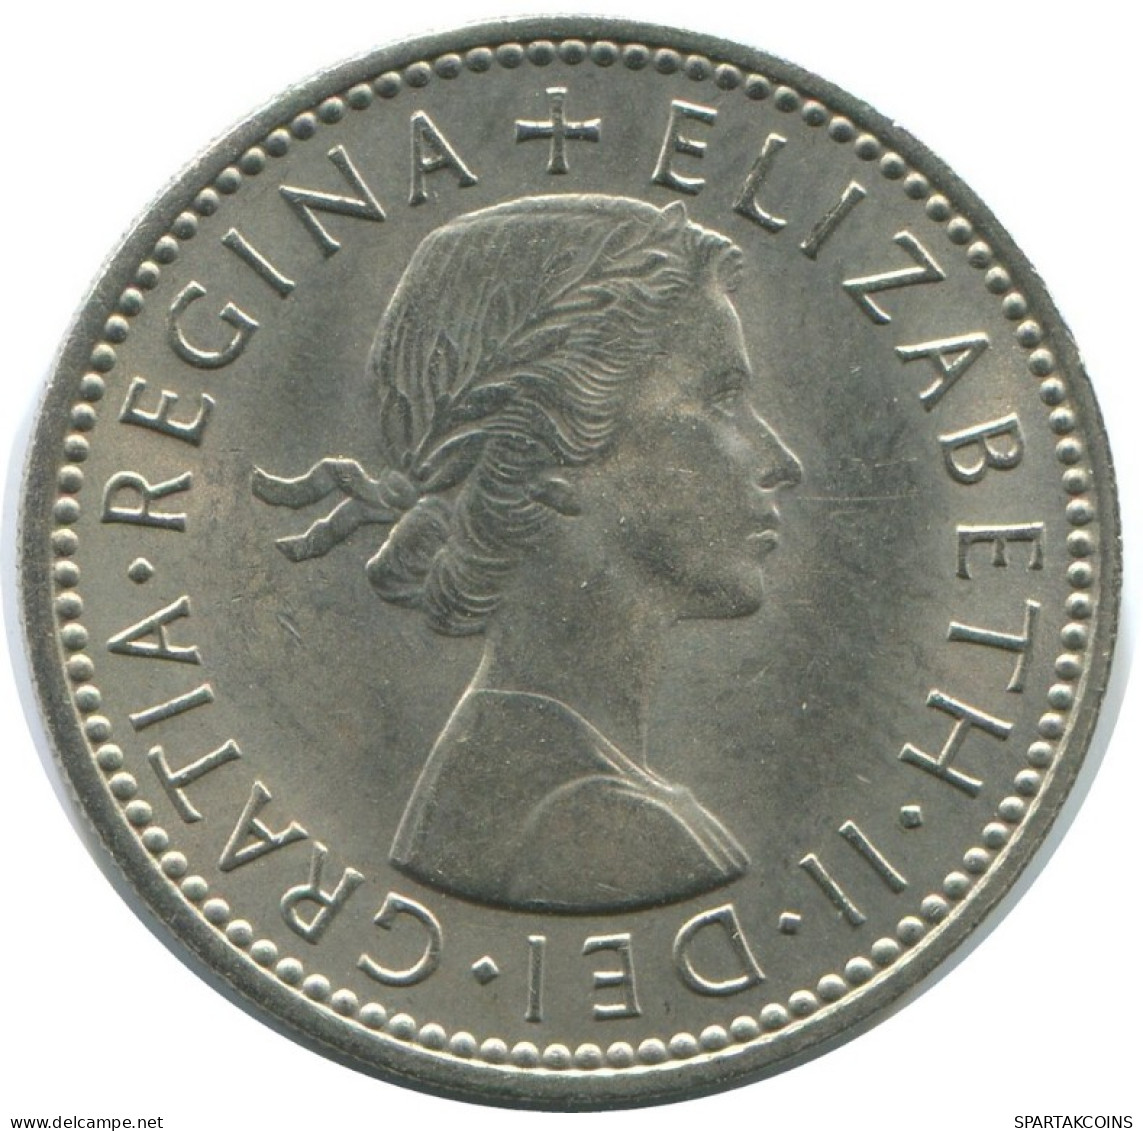 SHILLING 1966 UK GROßBRITANNIEN GREAT BRITAIN Münze #AH003.1.D.A - I. 1 Shilling